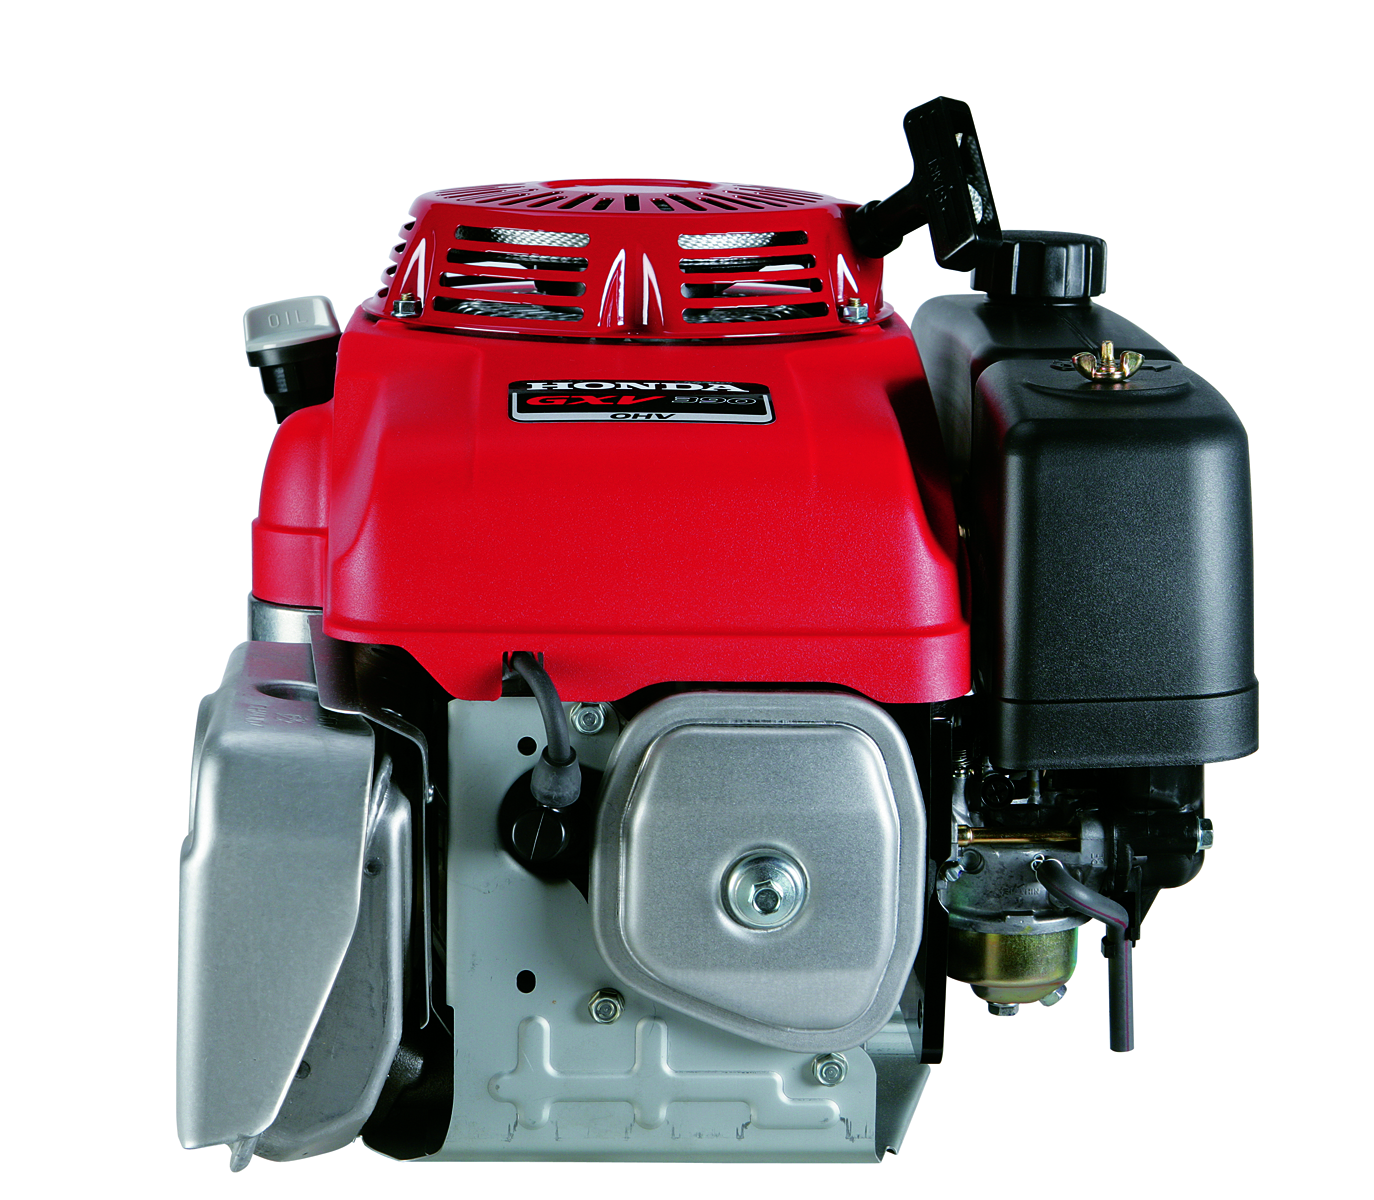 Honda Small Engine: Model GXV340K1DX3 Parts & Repair Help | Repair Clinic